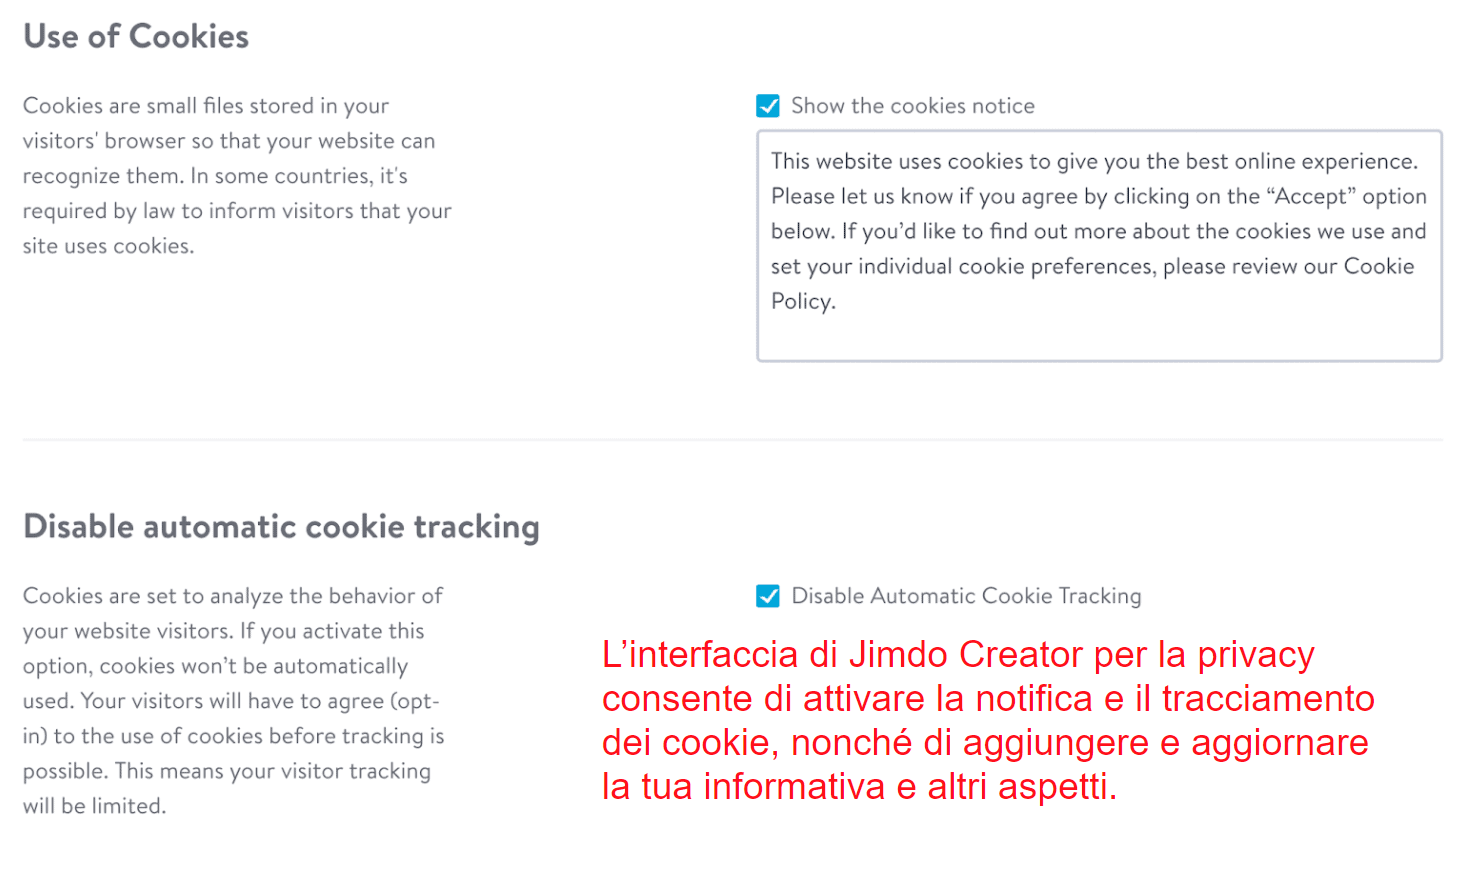 Privacy policy interface - Jimdo Creator